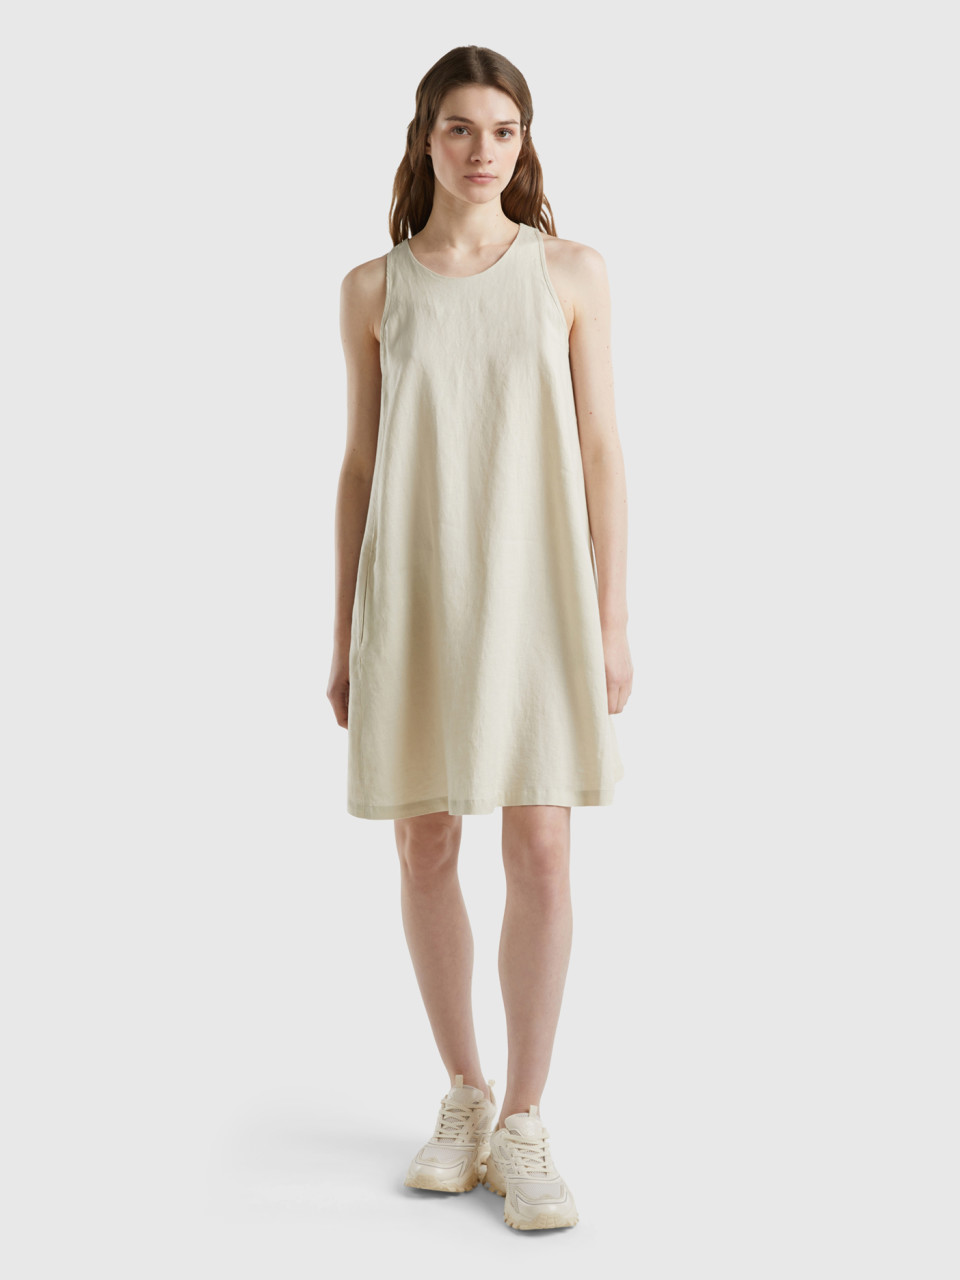 Benetton, Sleeveless Dress In Pure Linen, Beige, Women